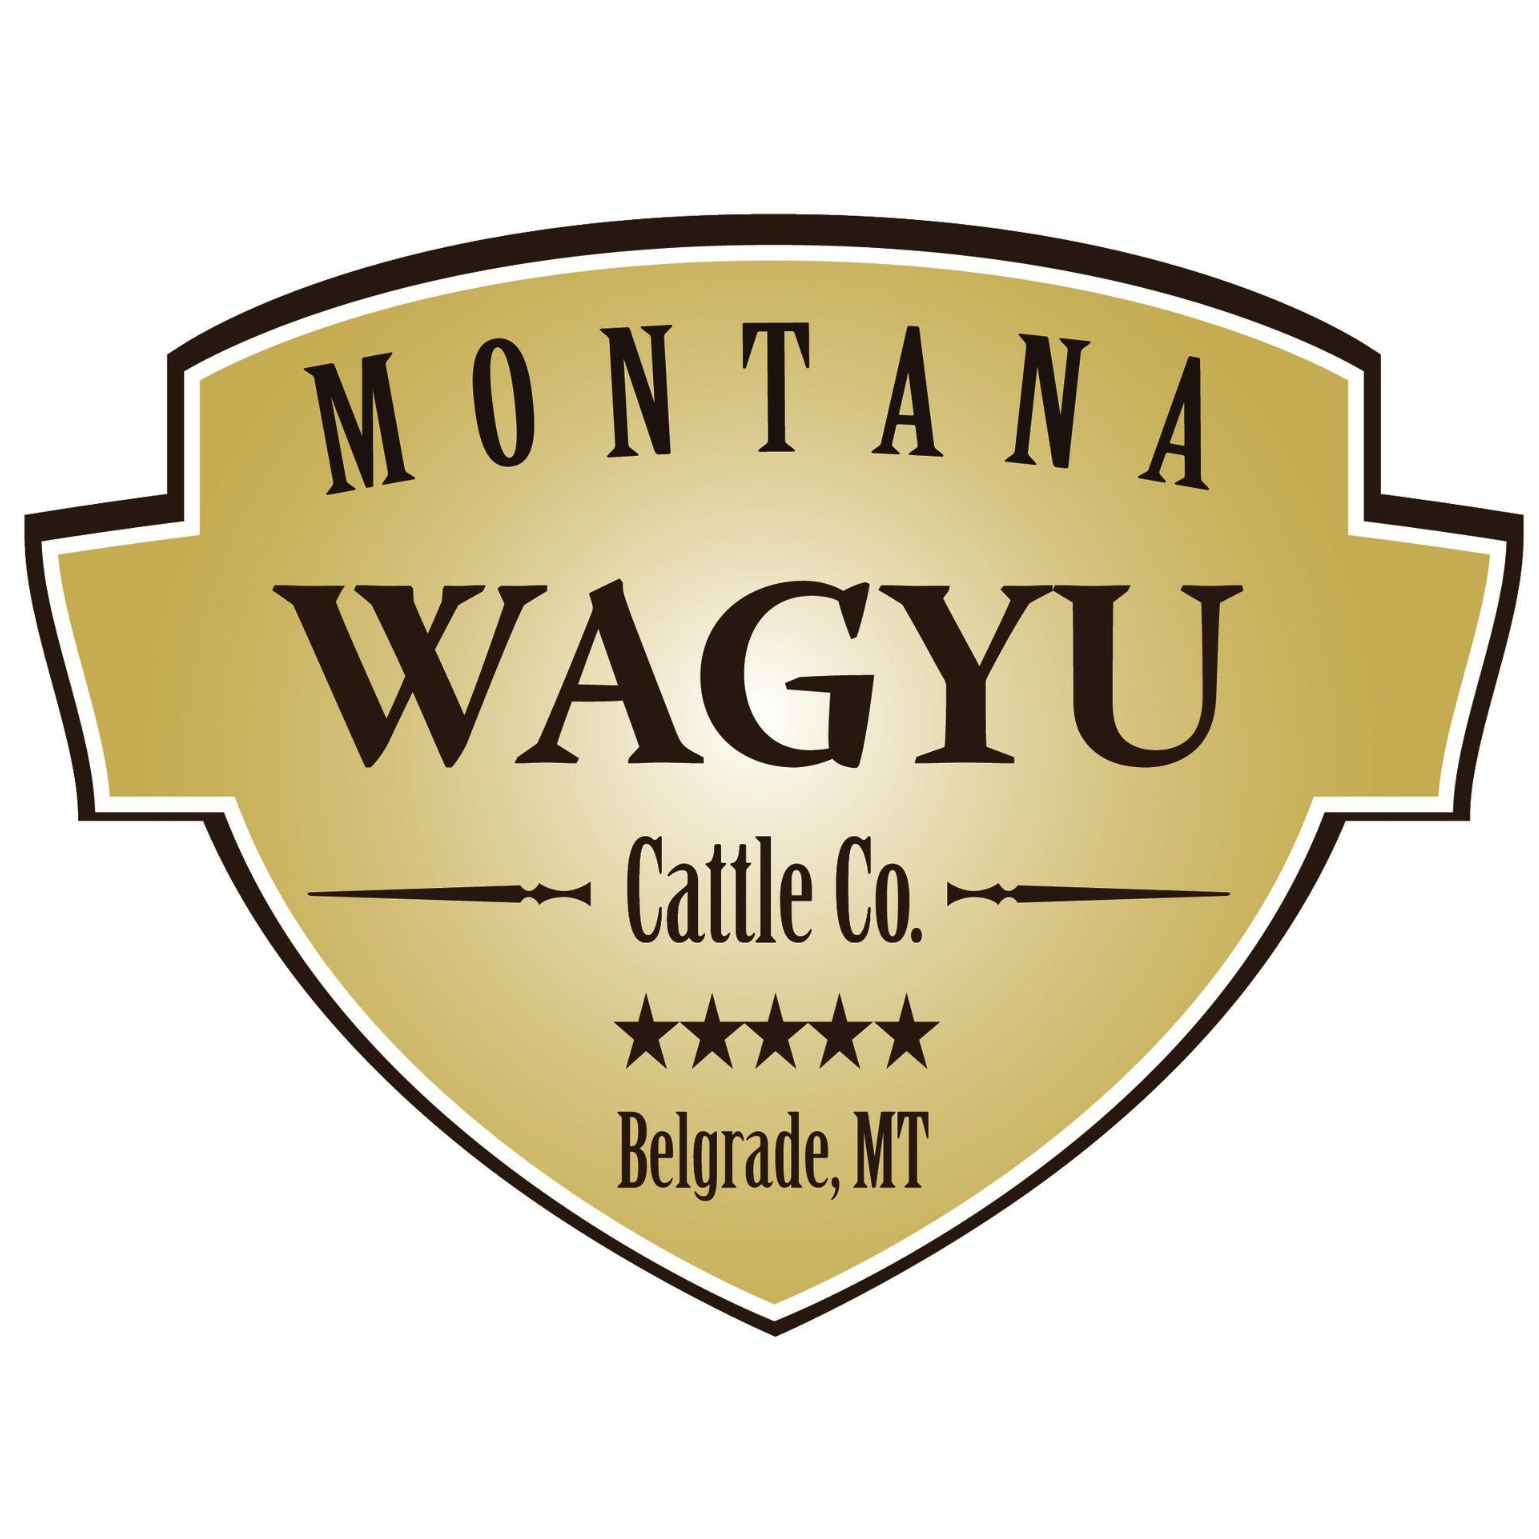 Montana Wagyu Cattle Co.